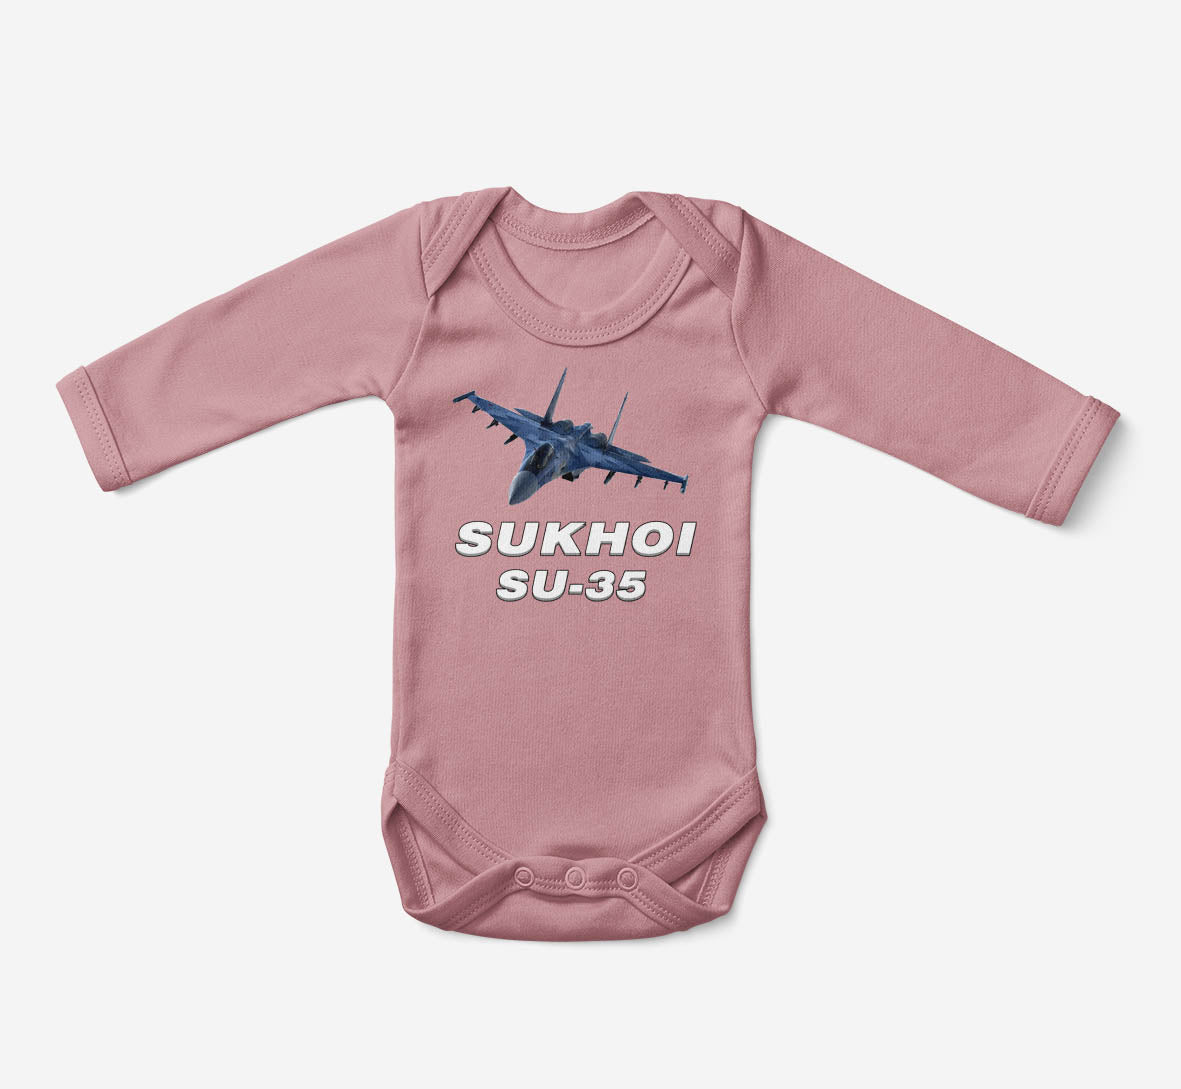 The Sukhoi SU-35 Designed Baby Bodysuits